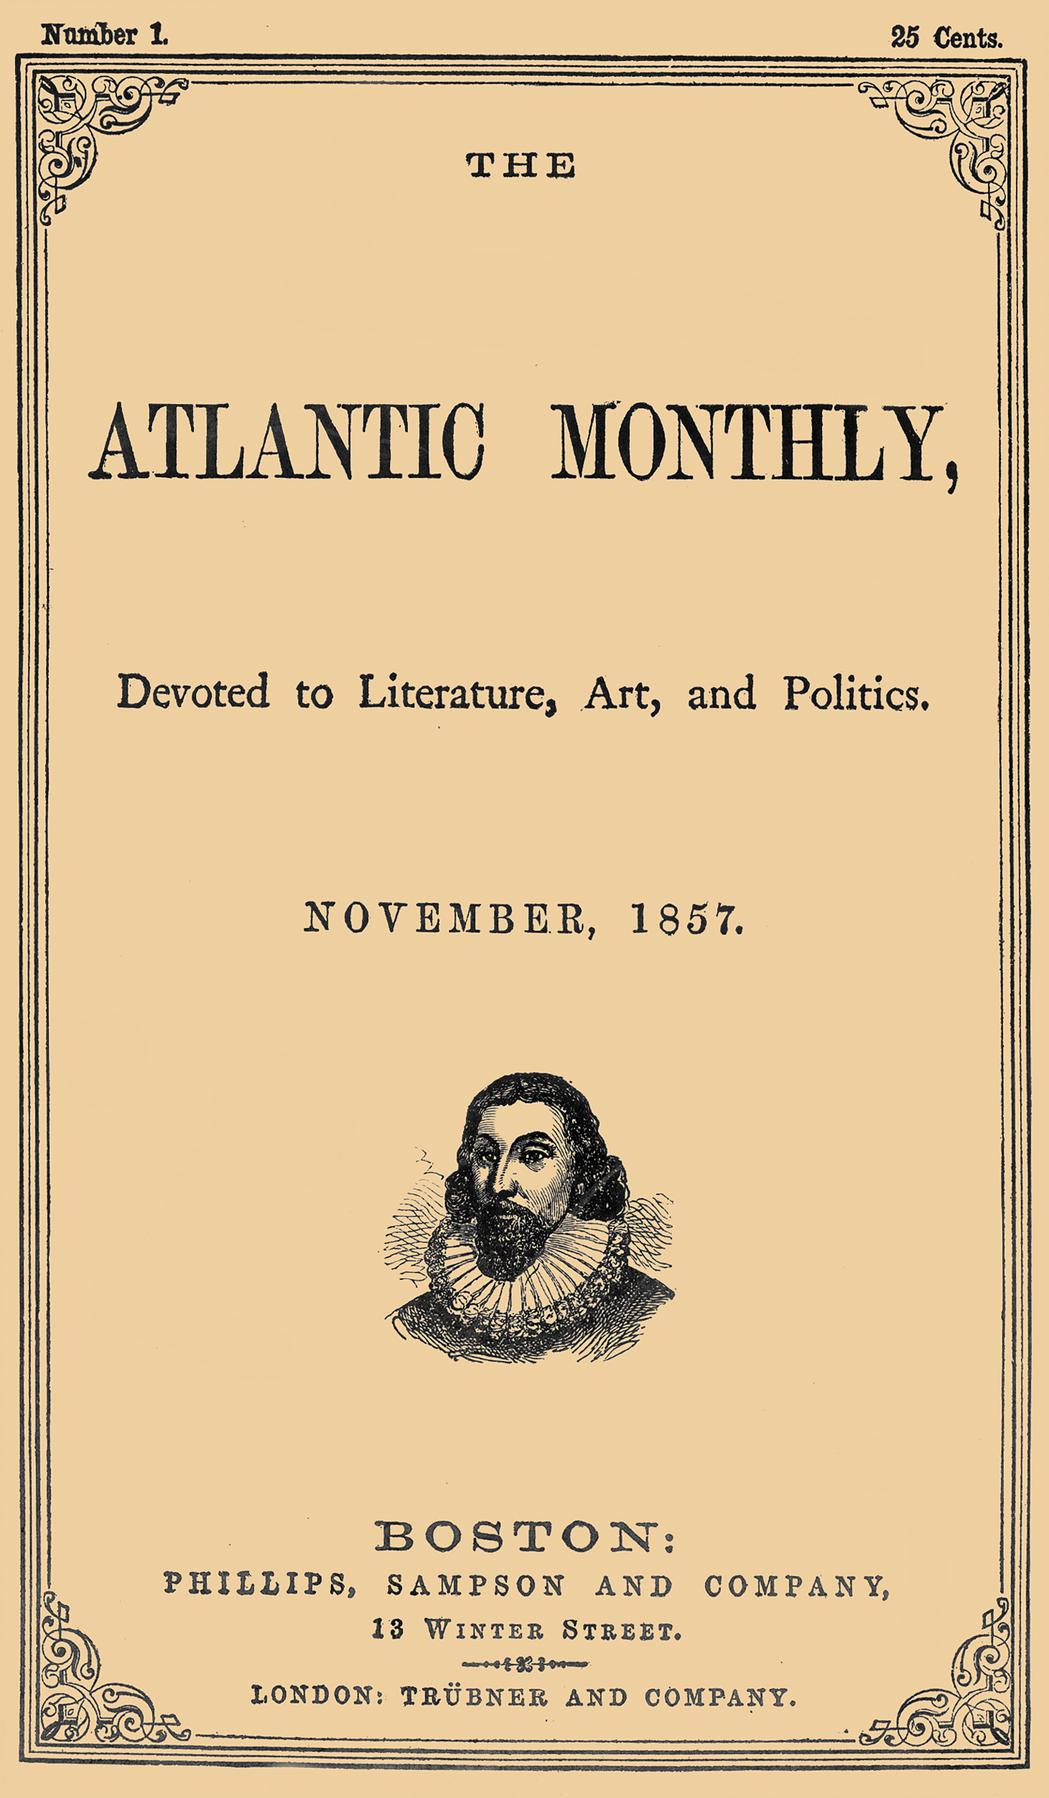 November 1857 Issue - The Atlantic